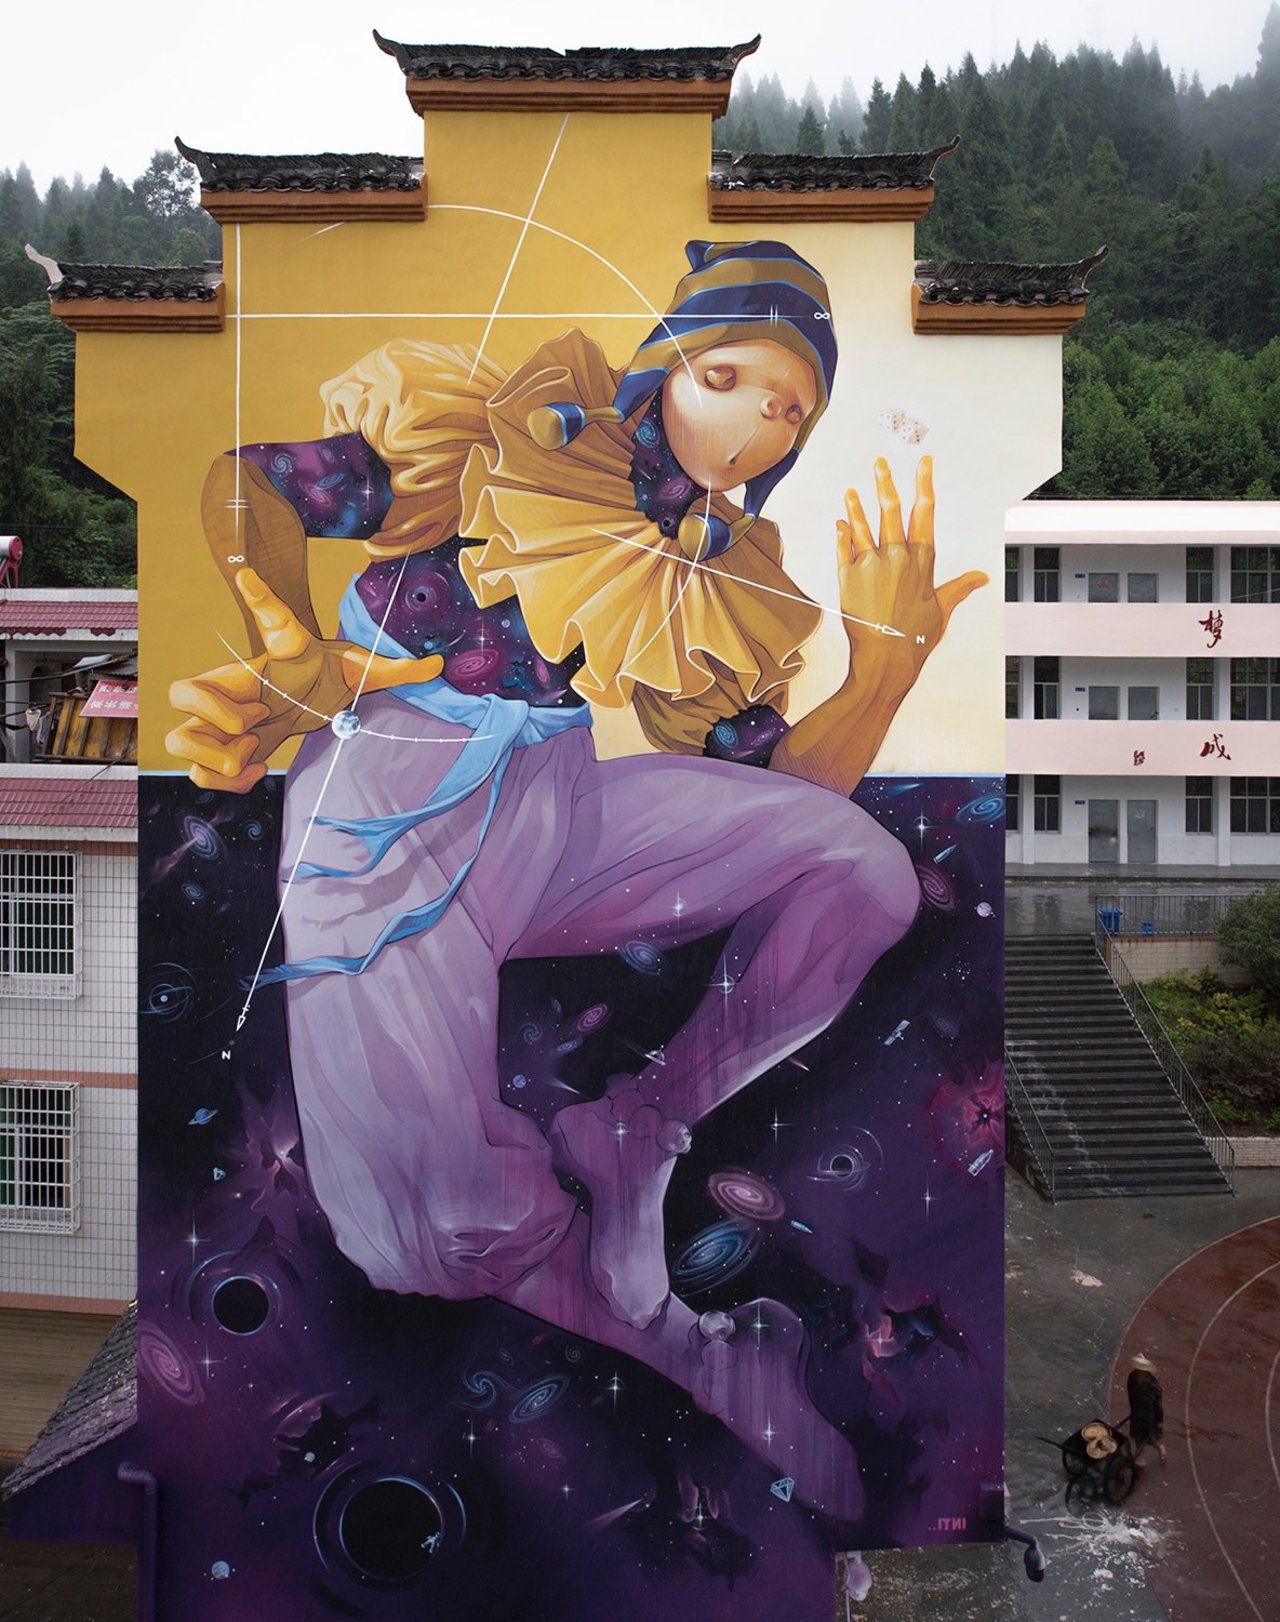 “Random” by INTI in Jishou, China #streetart https://streetartnews.net/2016/09/random-by-inti-in-jishou-china.html https://t.co/ogDg0dW6QB